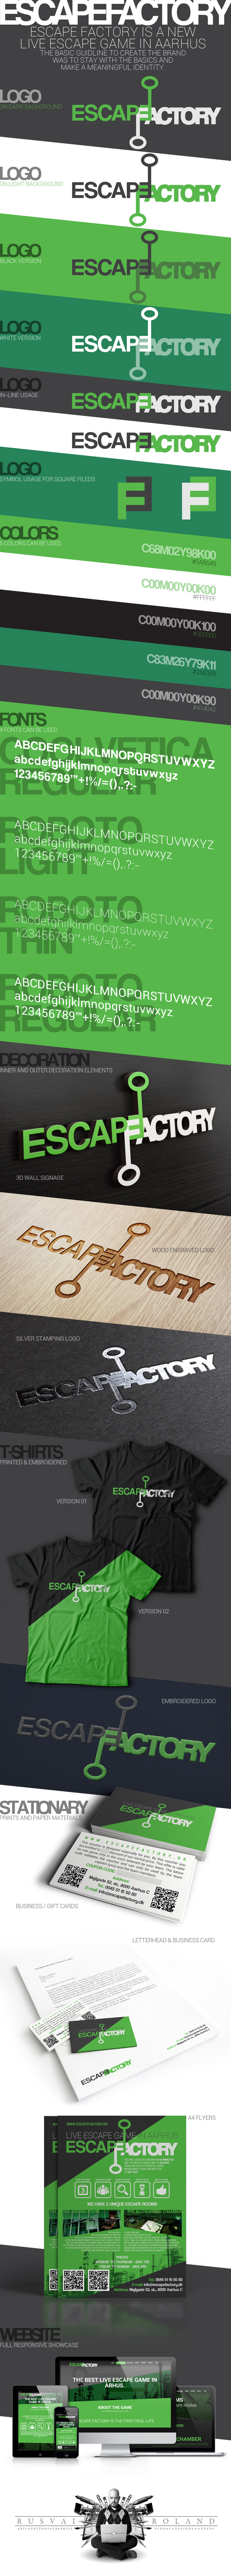 escape factory full identity design branding